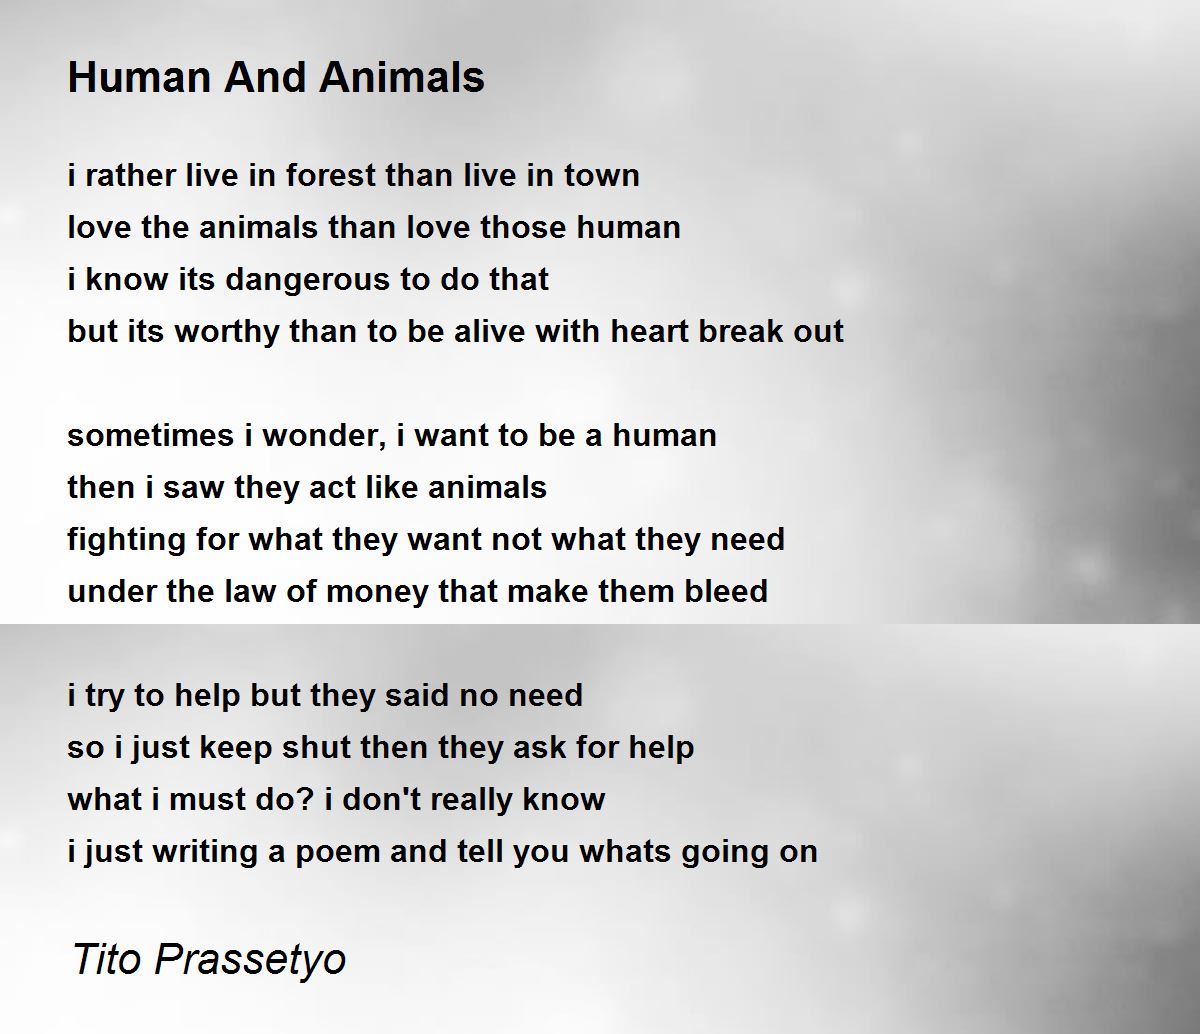 Human And Animals - Human And Animals Poem by Tito Prassetyo